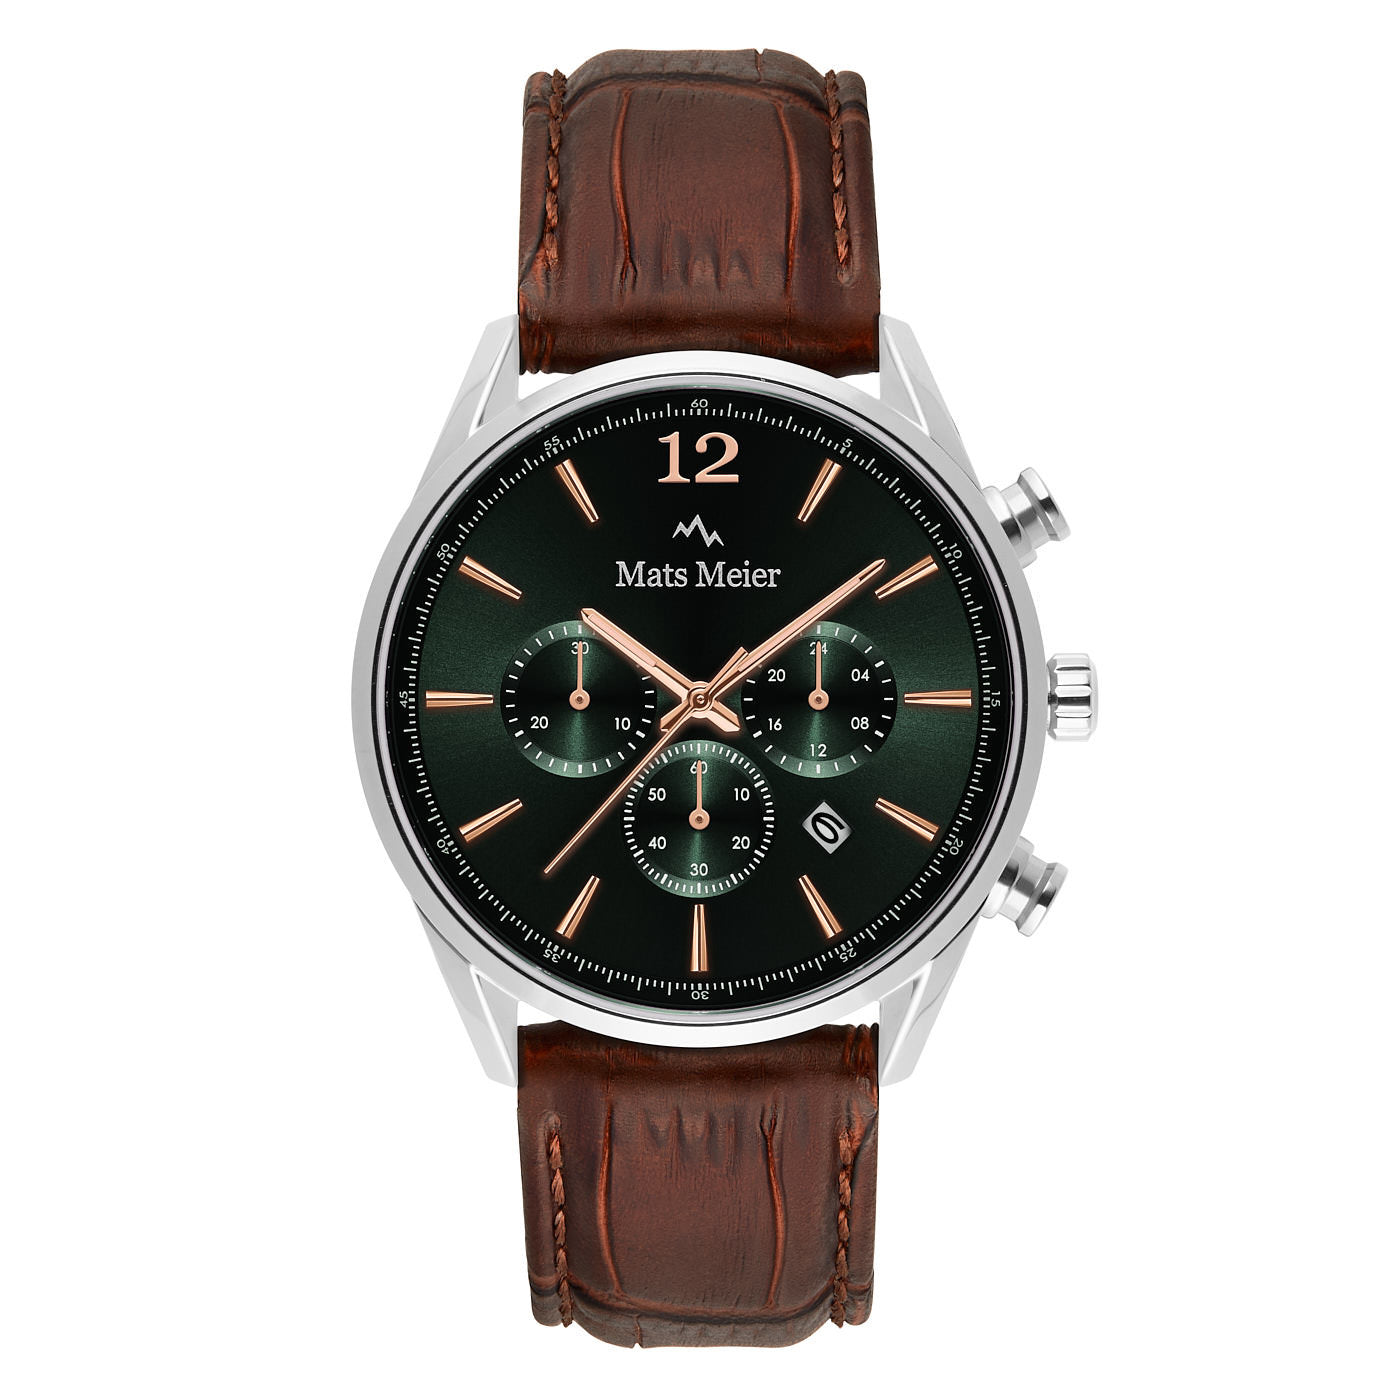 Grand Cornier chronograph mens watch green / silver colored / brown